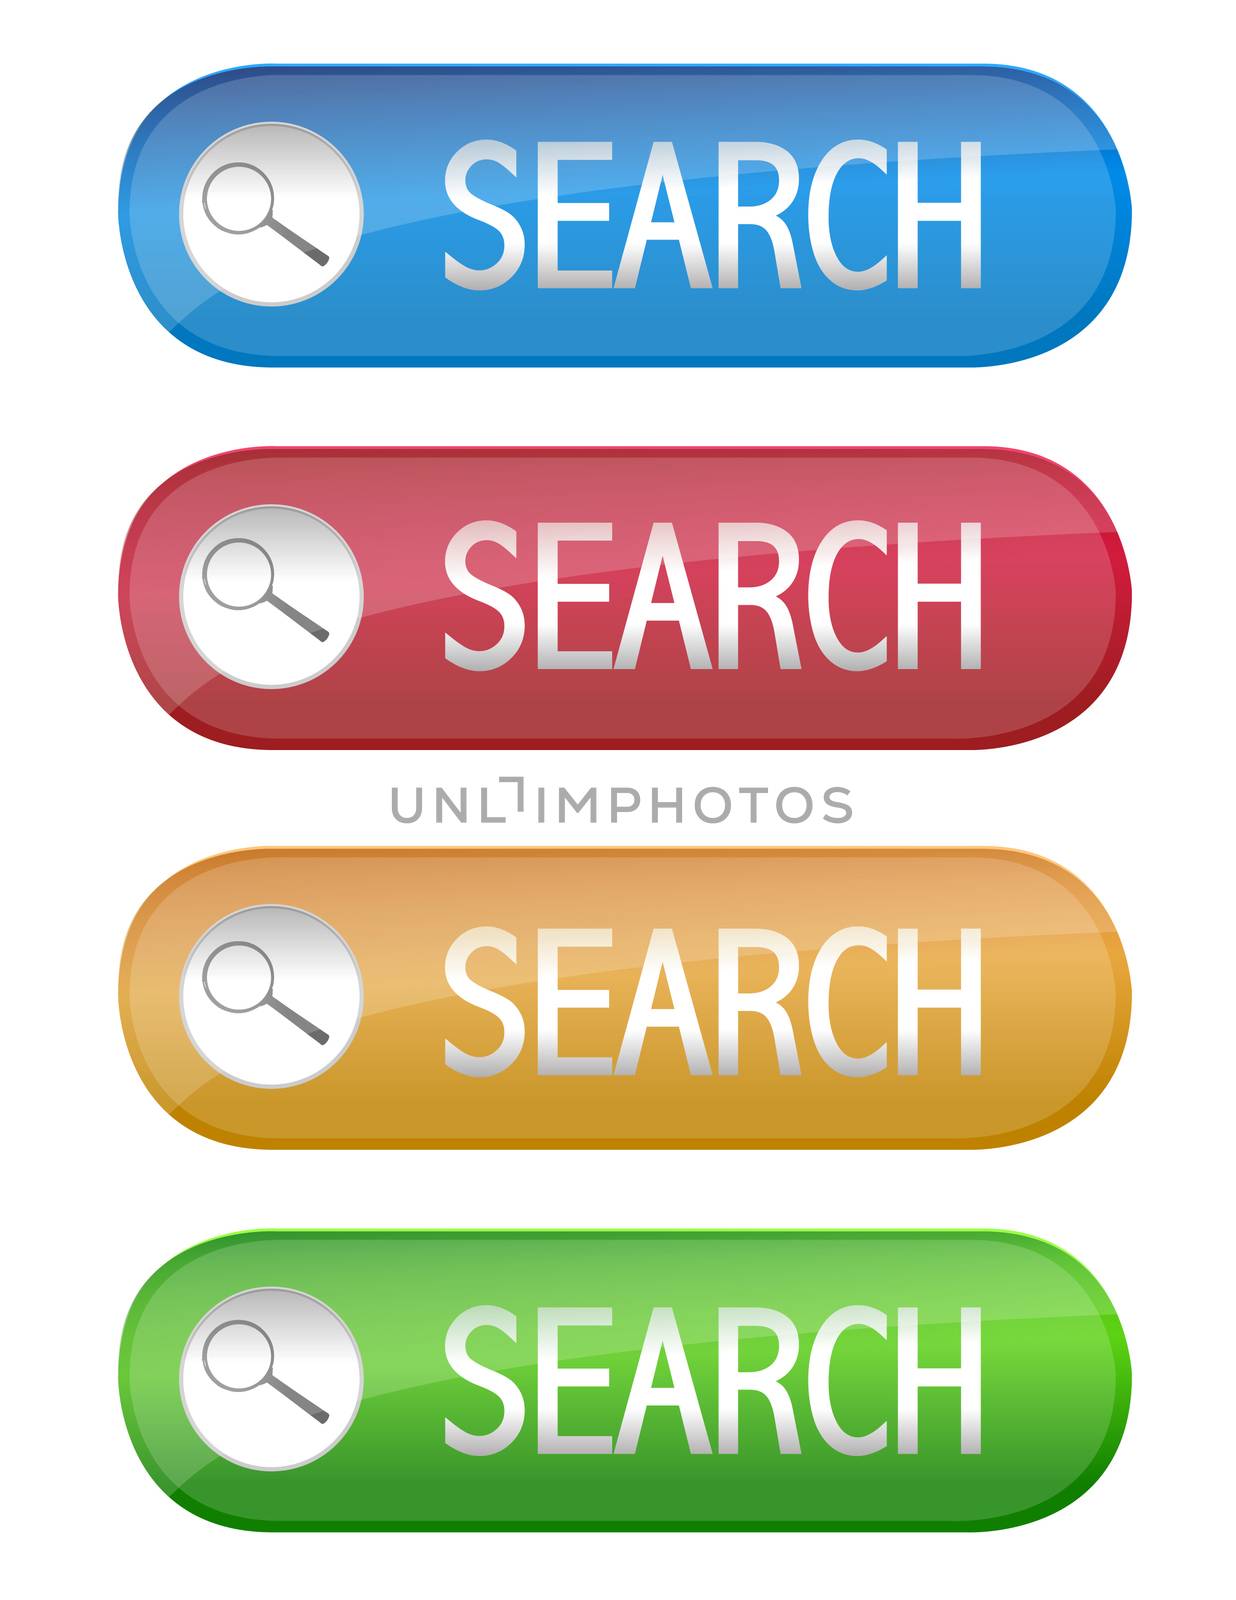 Search button by alexmillos